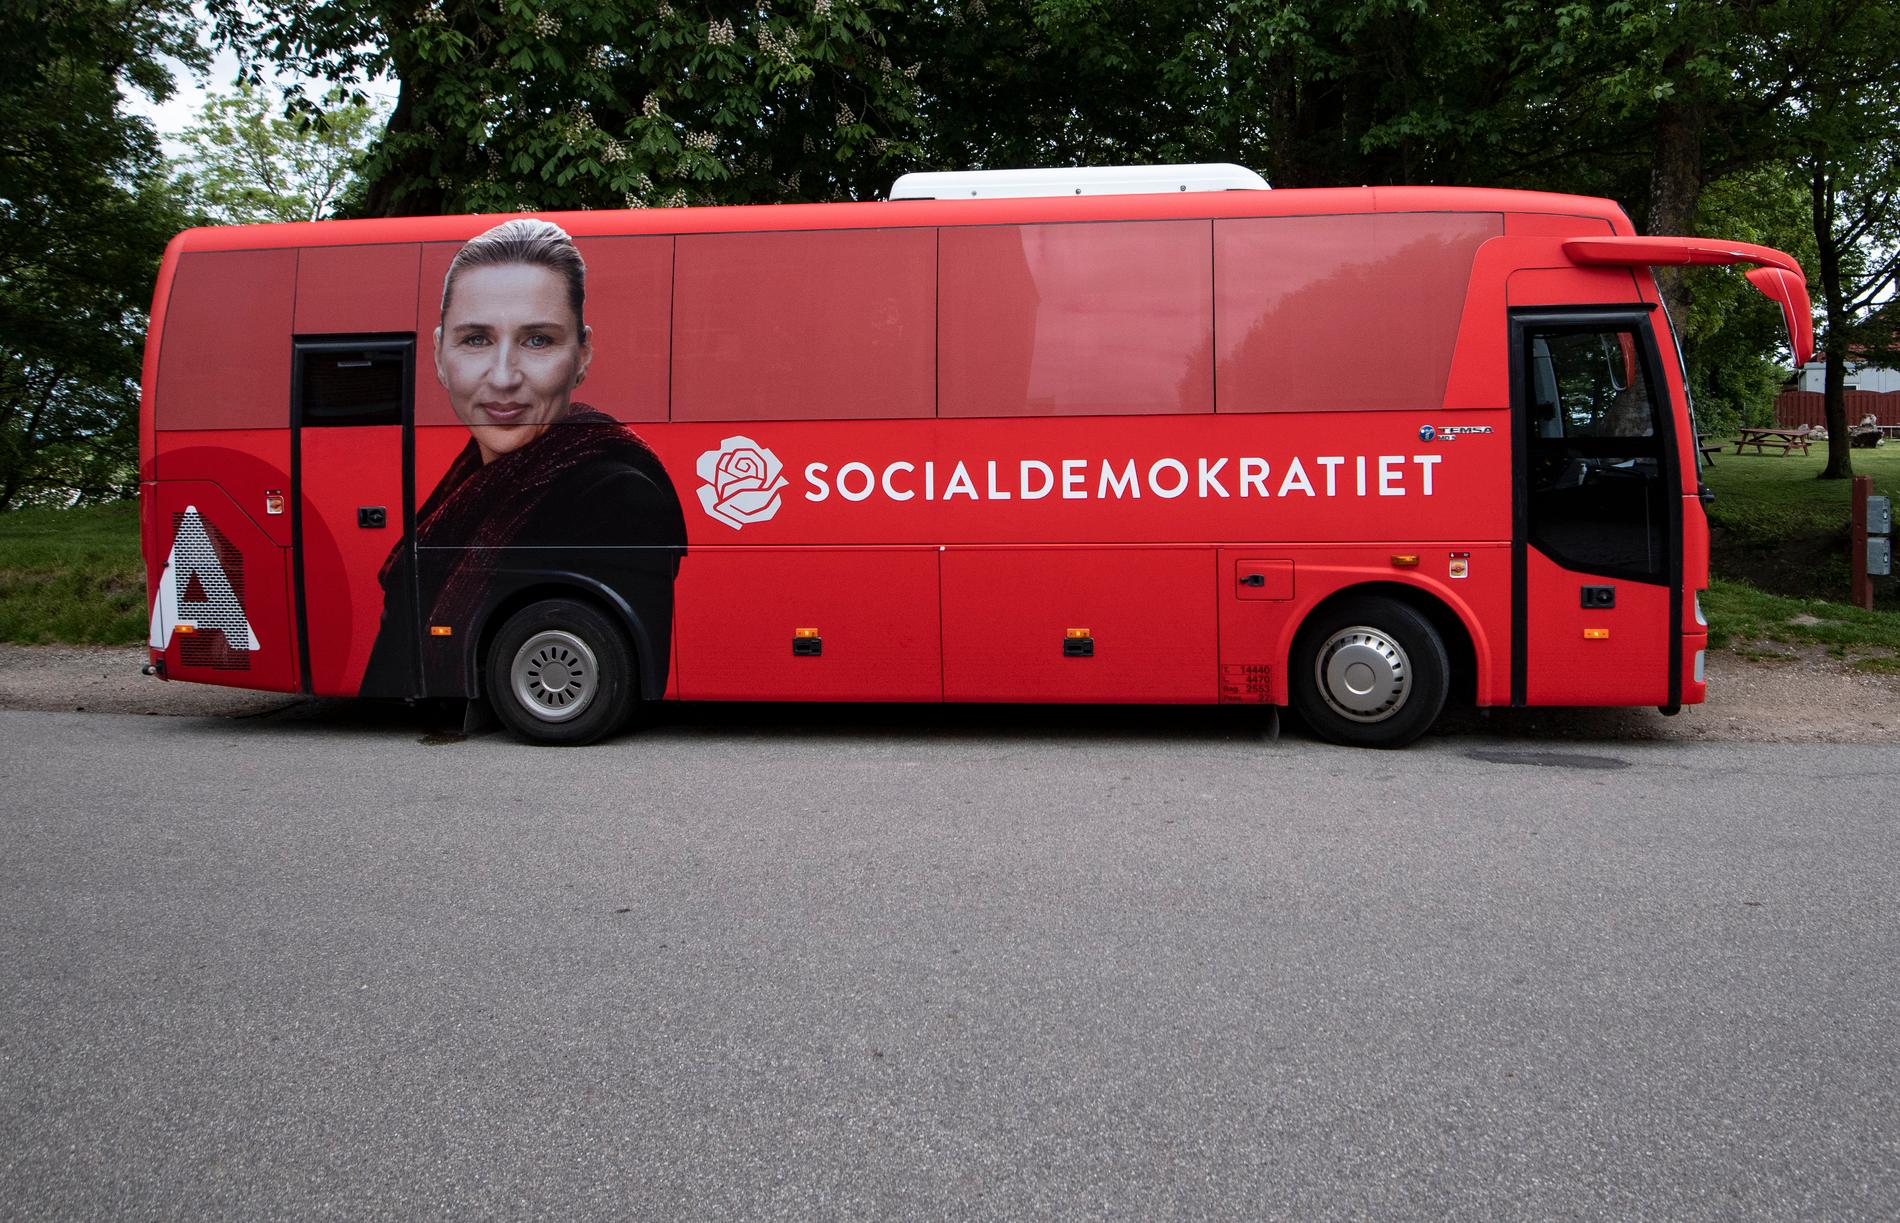 Mette Frederiksens kampanjbuss rullar Danmark runt under den danska valrörelsens sista dagar.